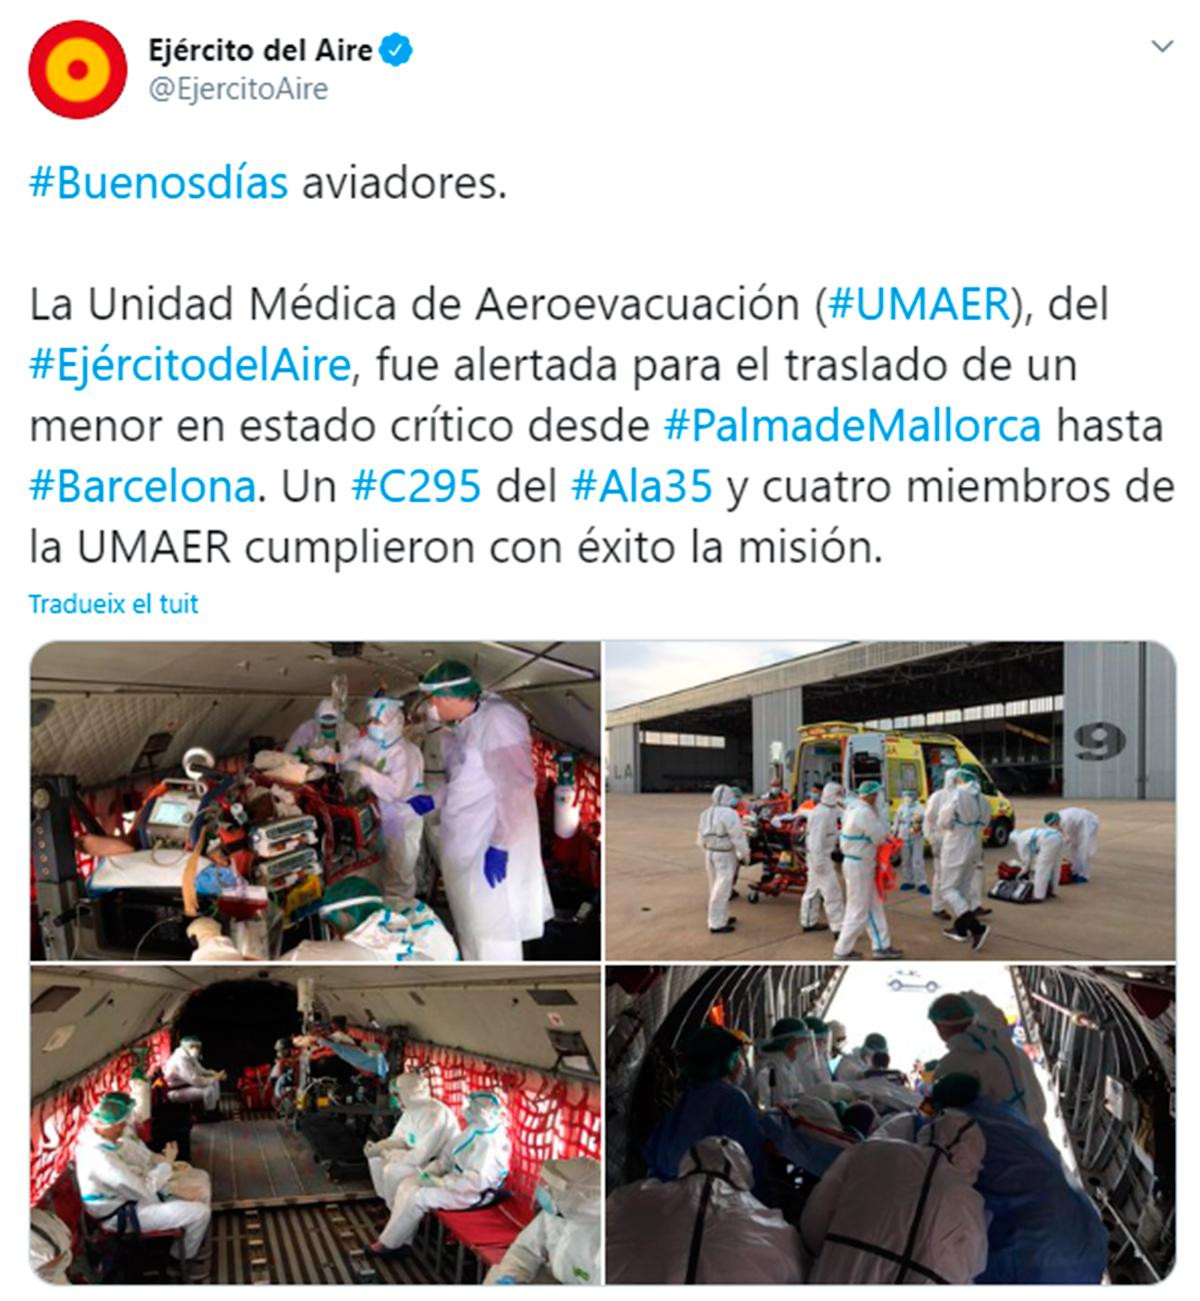 El Ejército del Aire traslada de Mallorca a Barcelona a una niña grave por Covid-19 / TWITTER